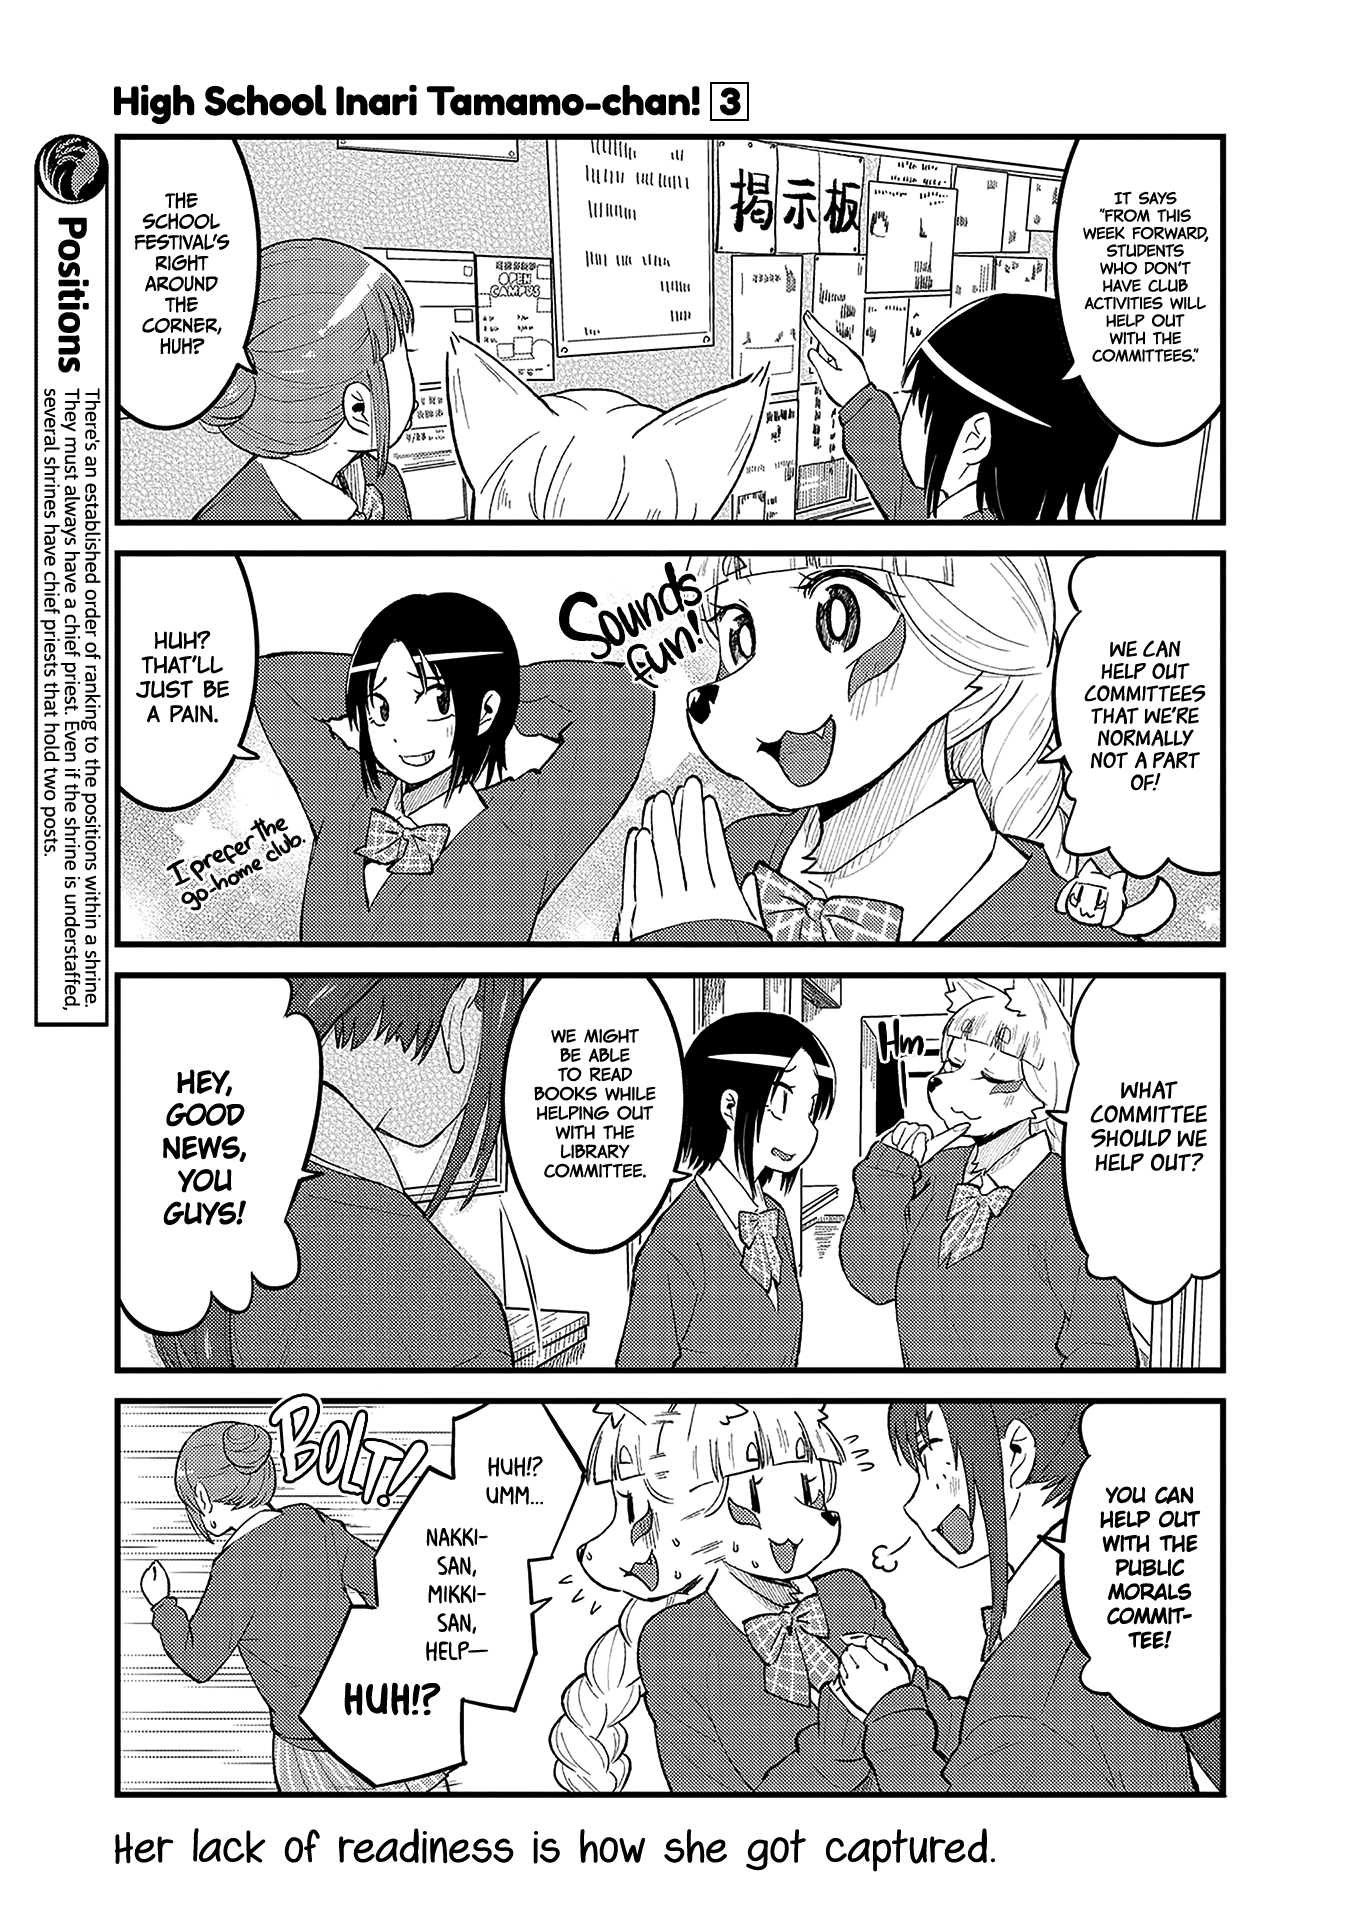 High School Inari Tamamo-Chan! chapter 42 - page 3